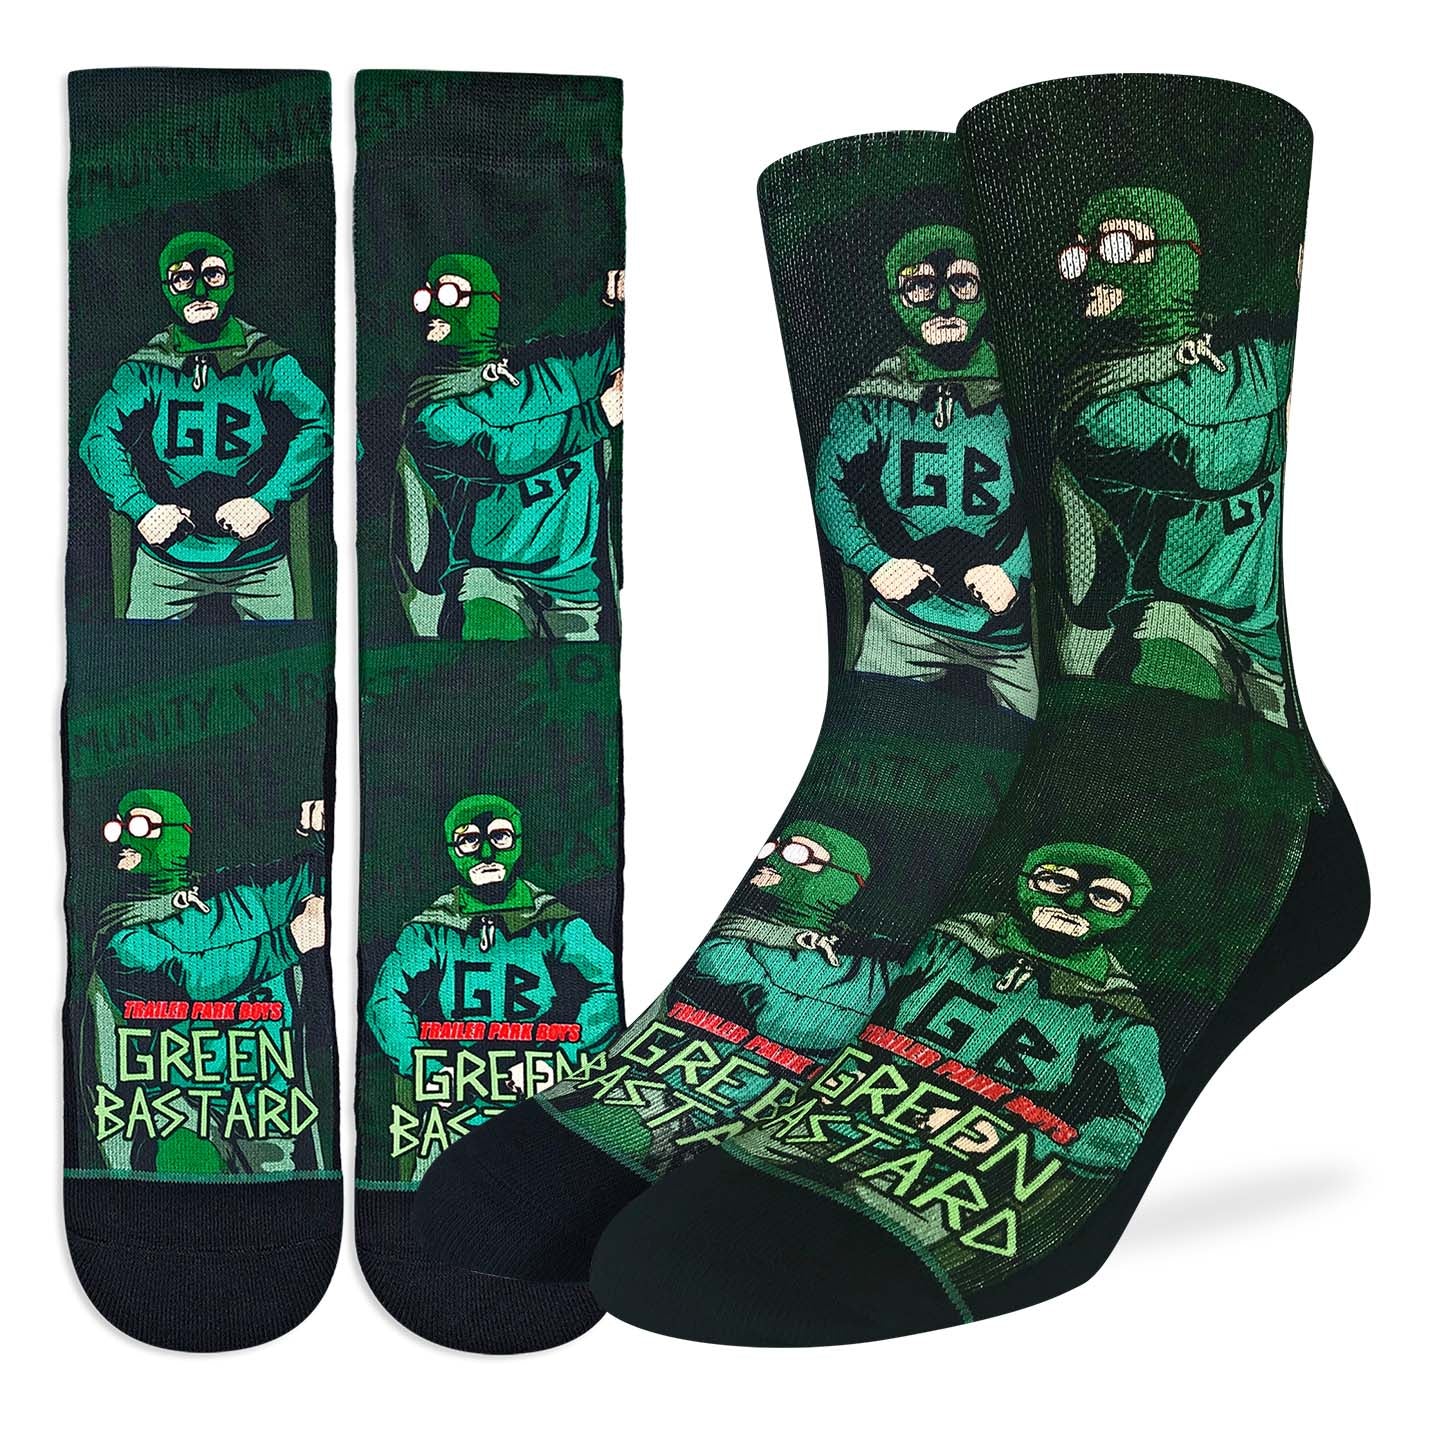 Trailer Park Boys Green Bastard Socks (Size 8-13)